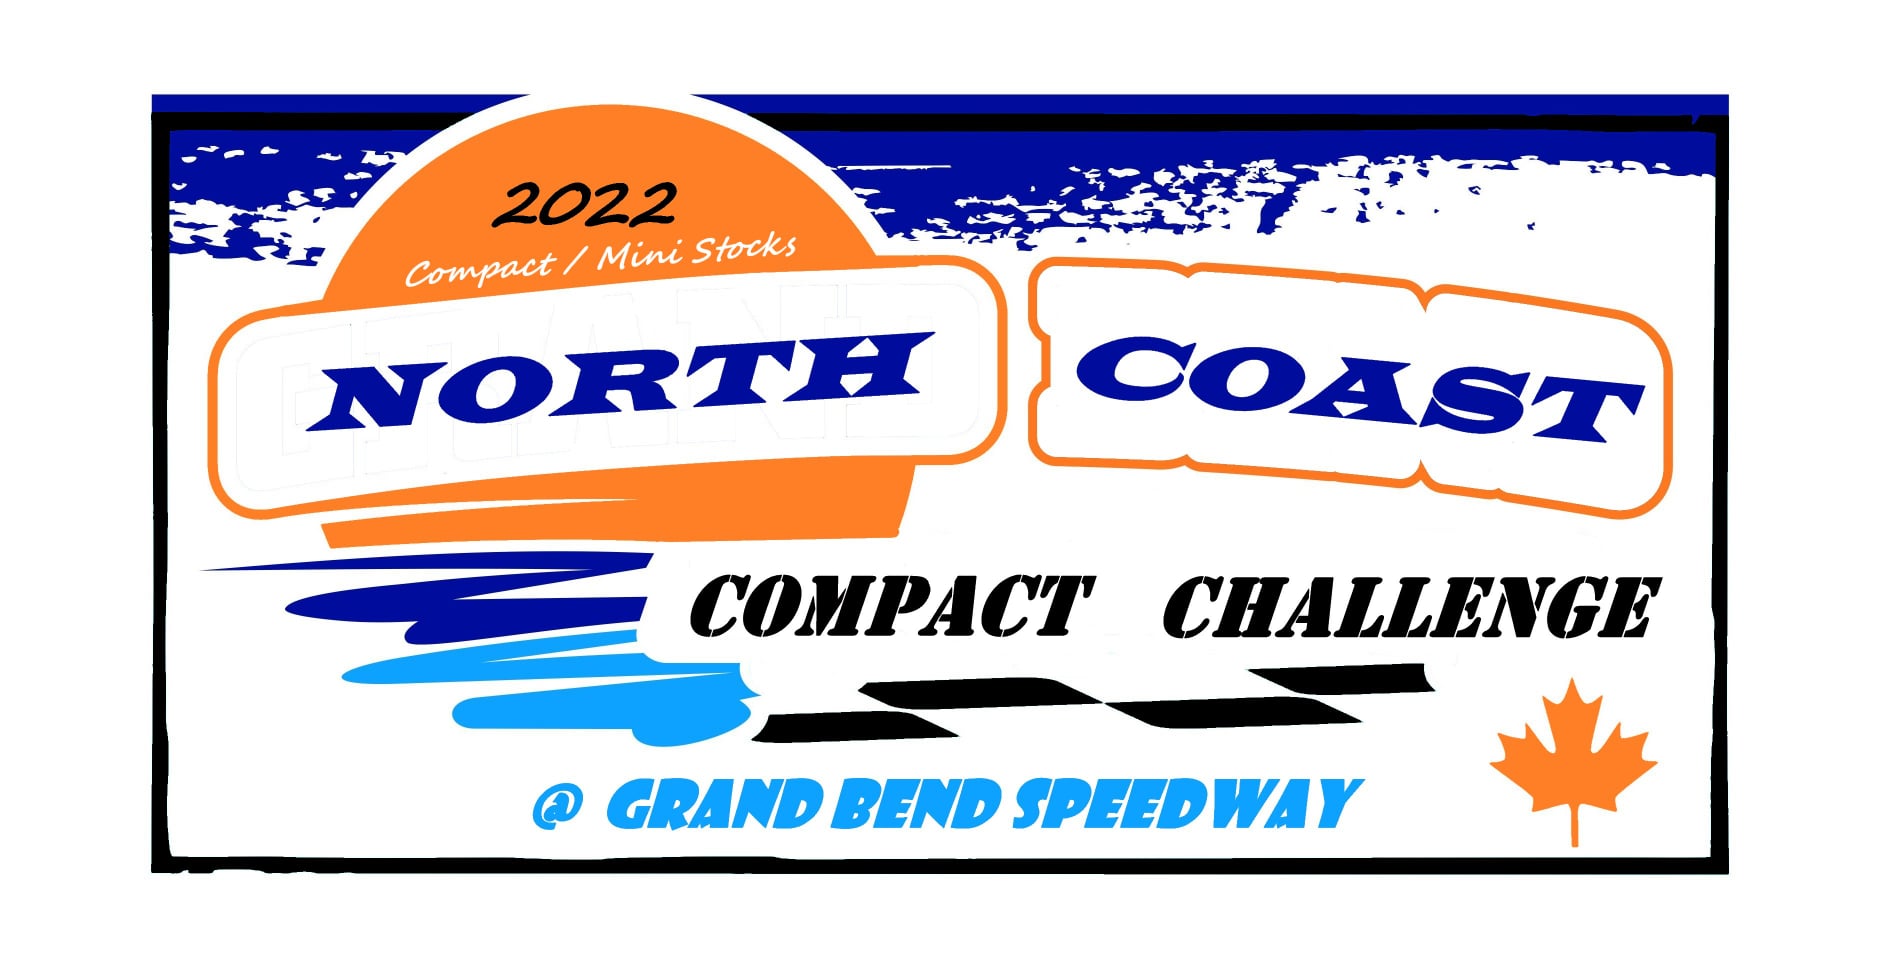 2022 Season - Grand Bend Speedway